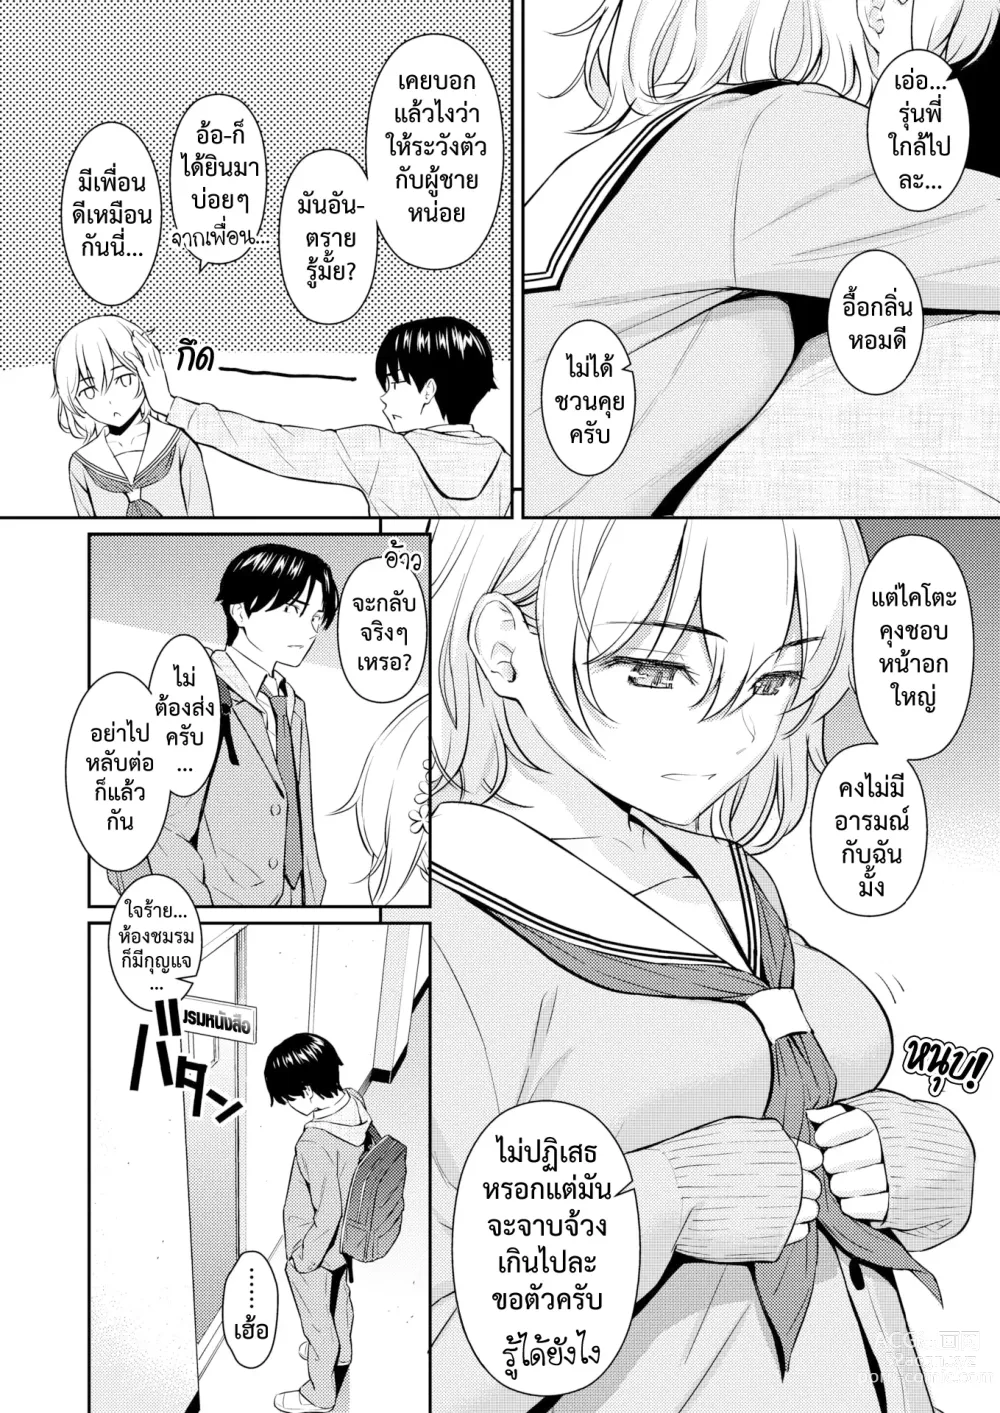 Page 7 of manga ขาวบริสุทธิ์